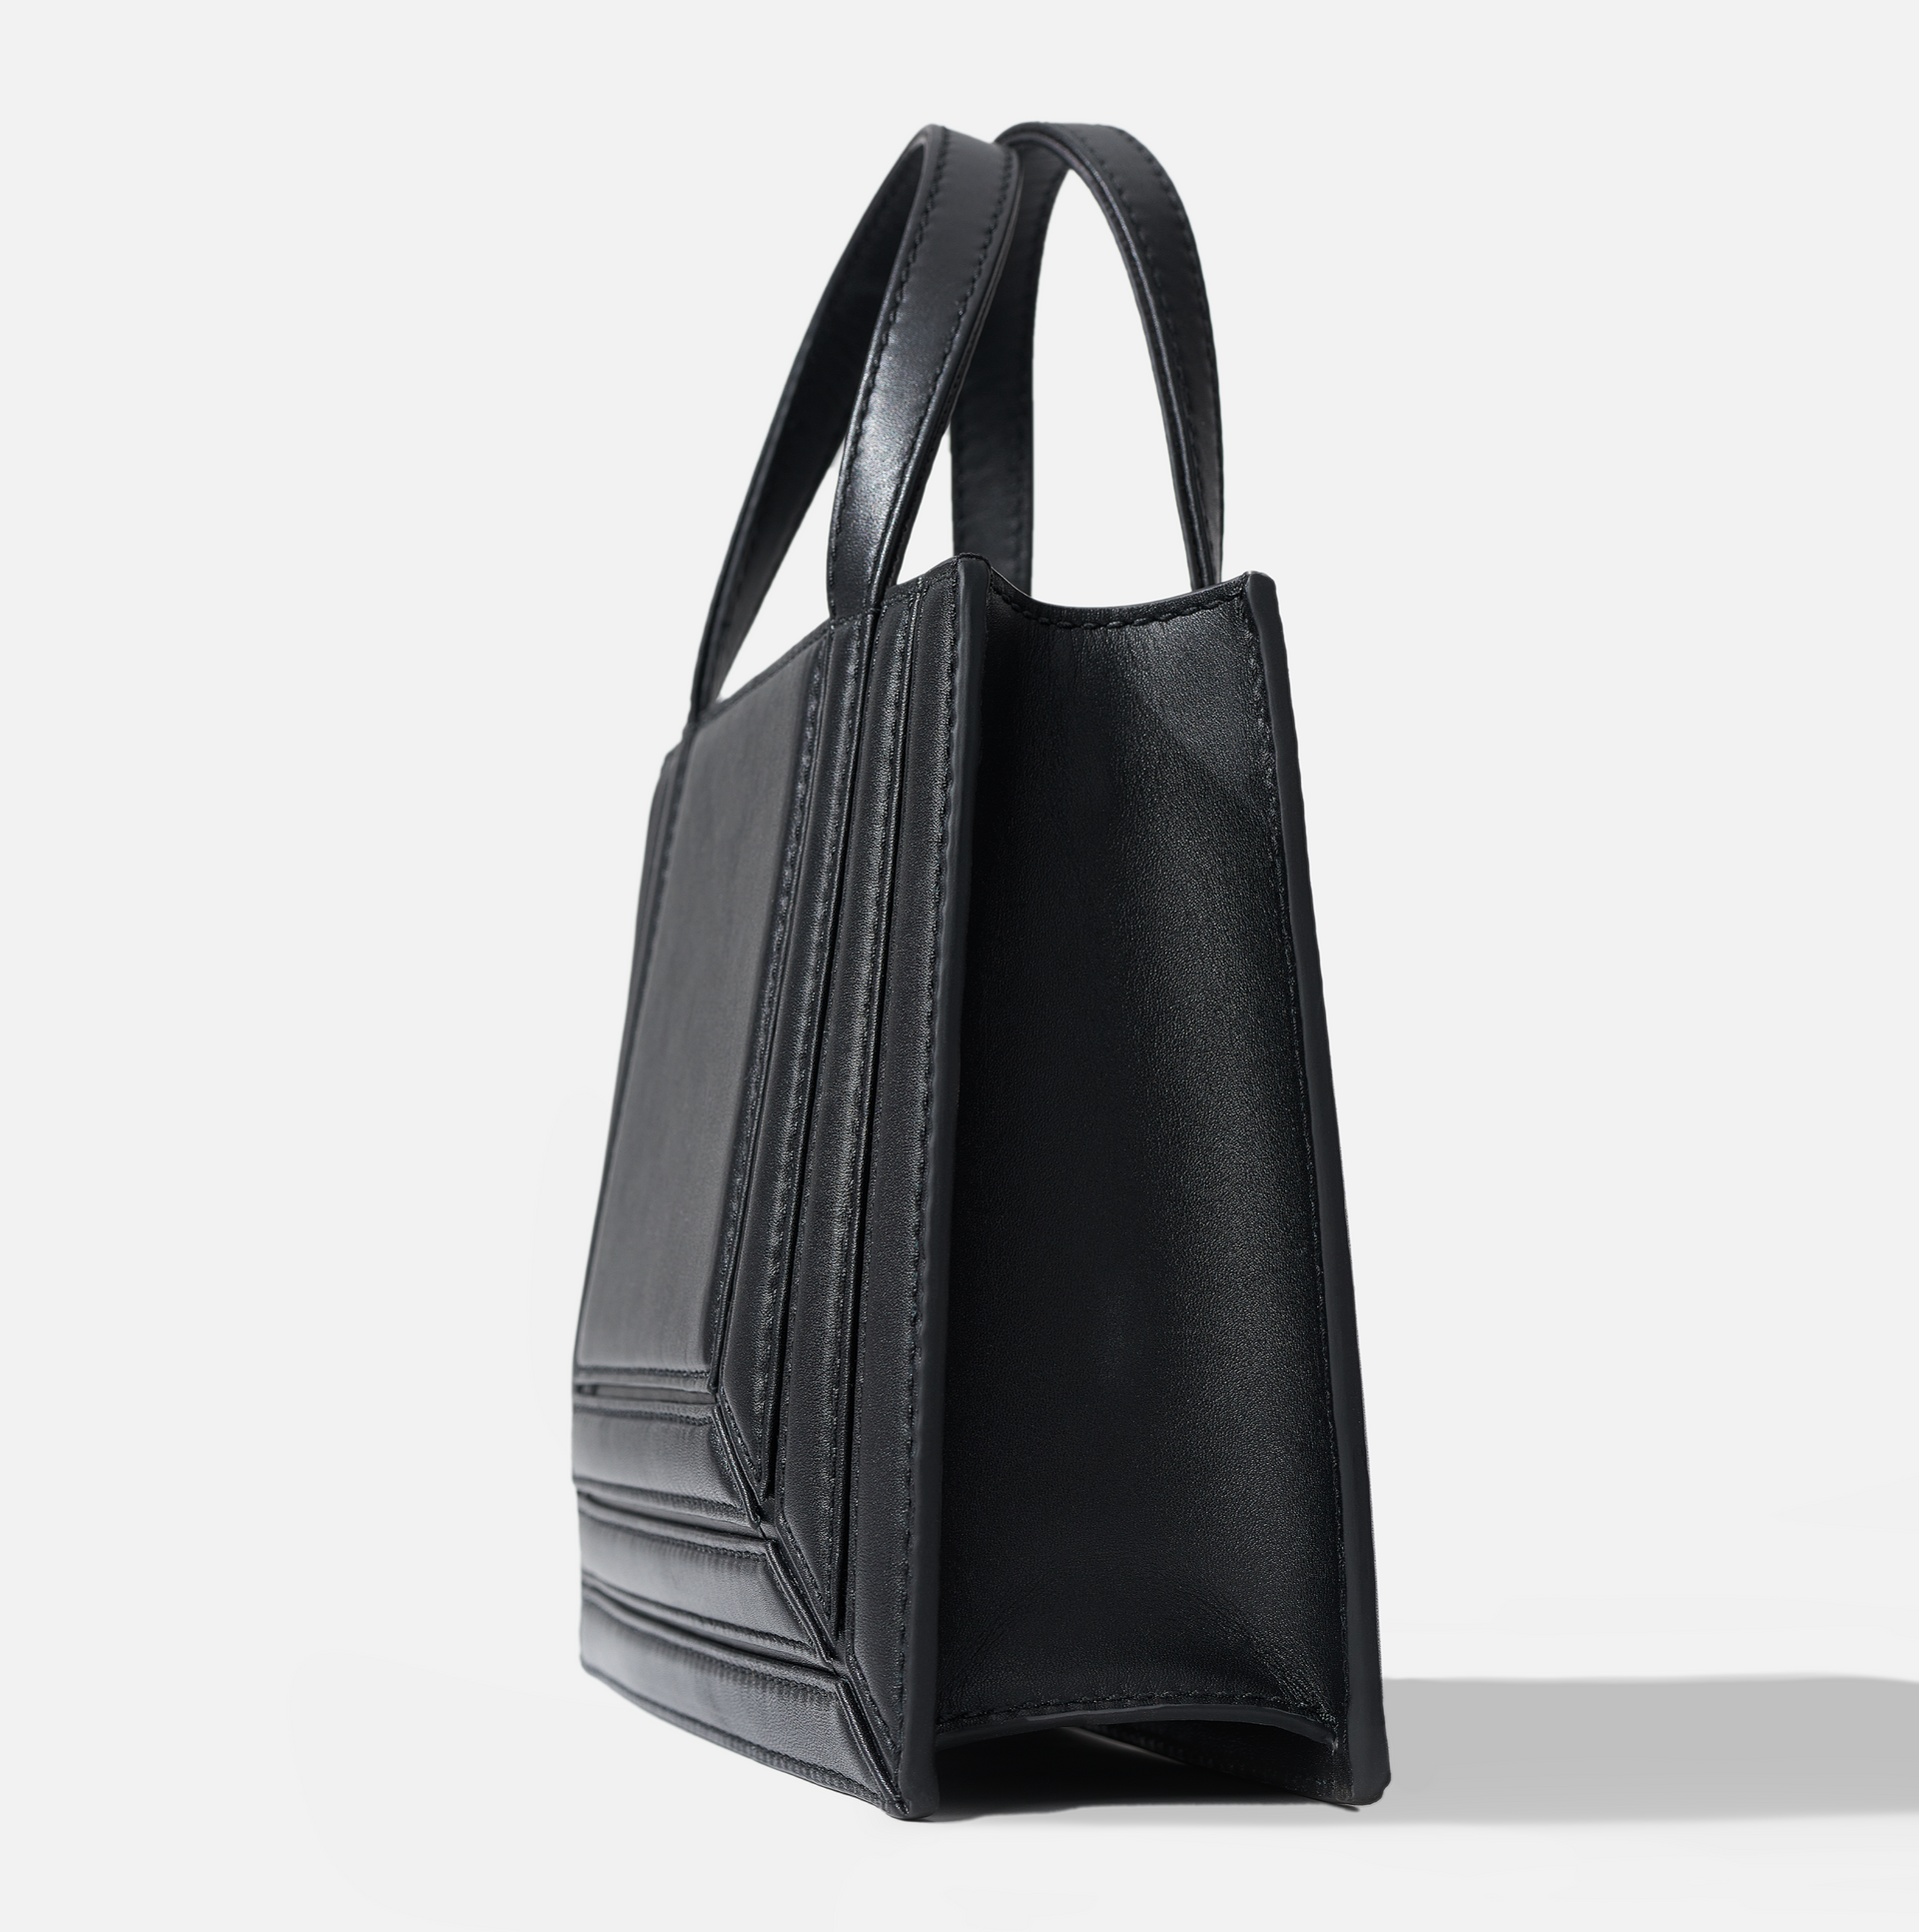 Palladian mini laramie leather double handle bag in black